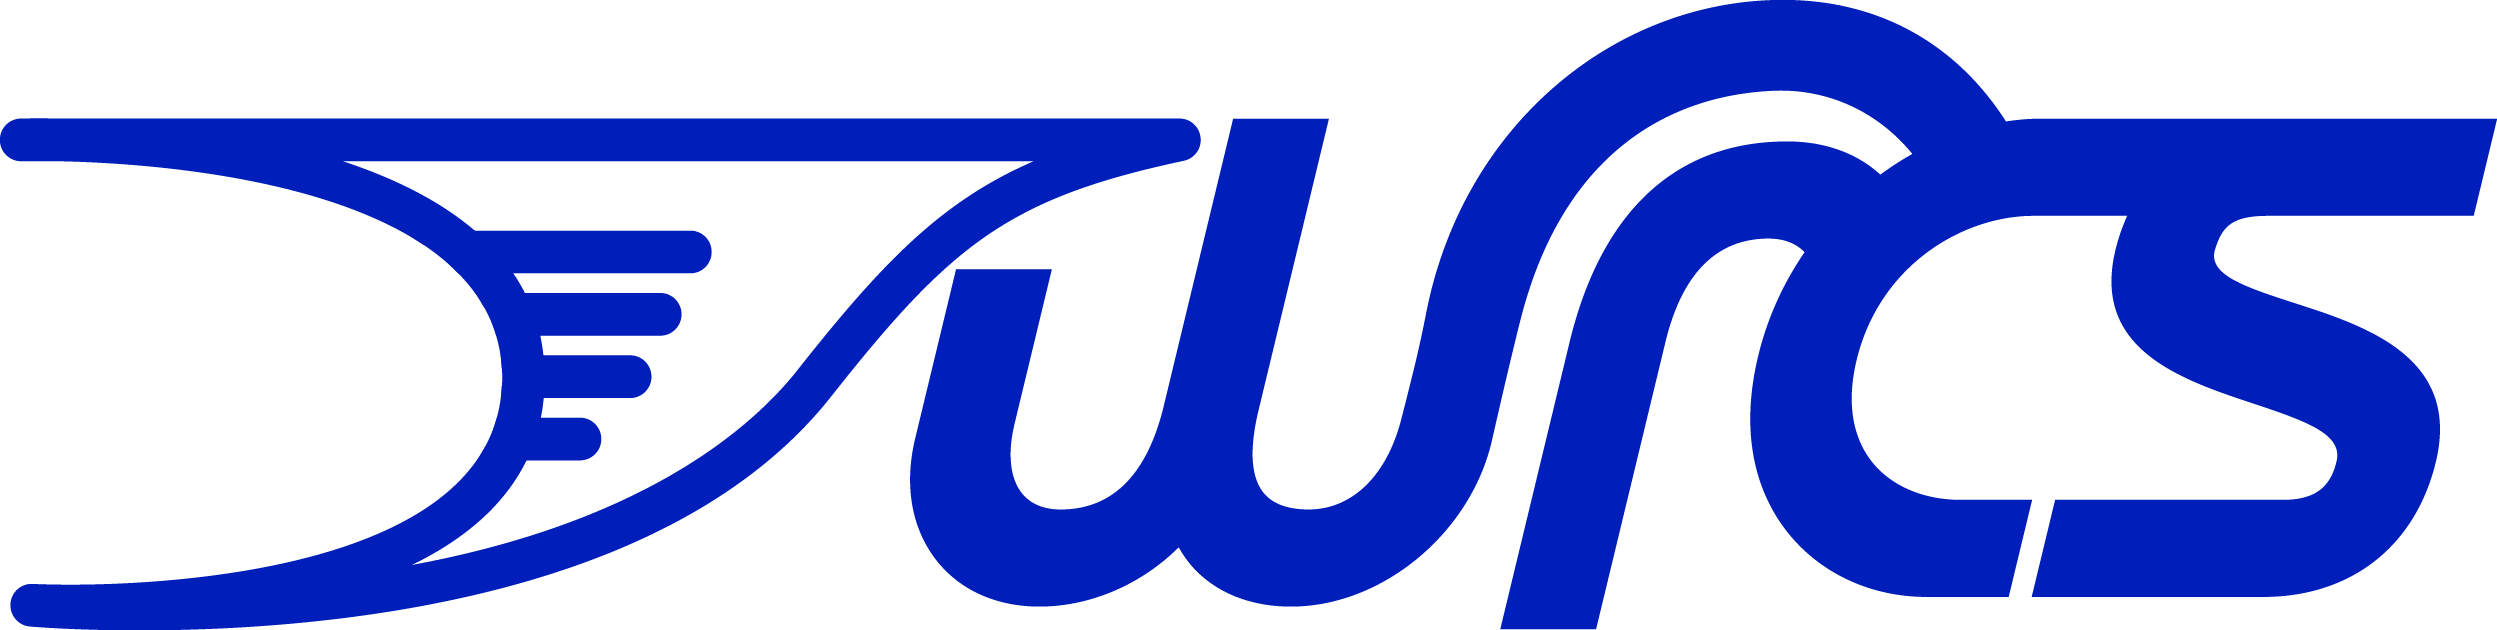 WRCS logo